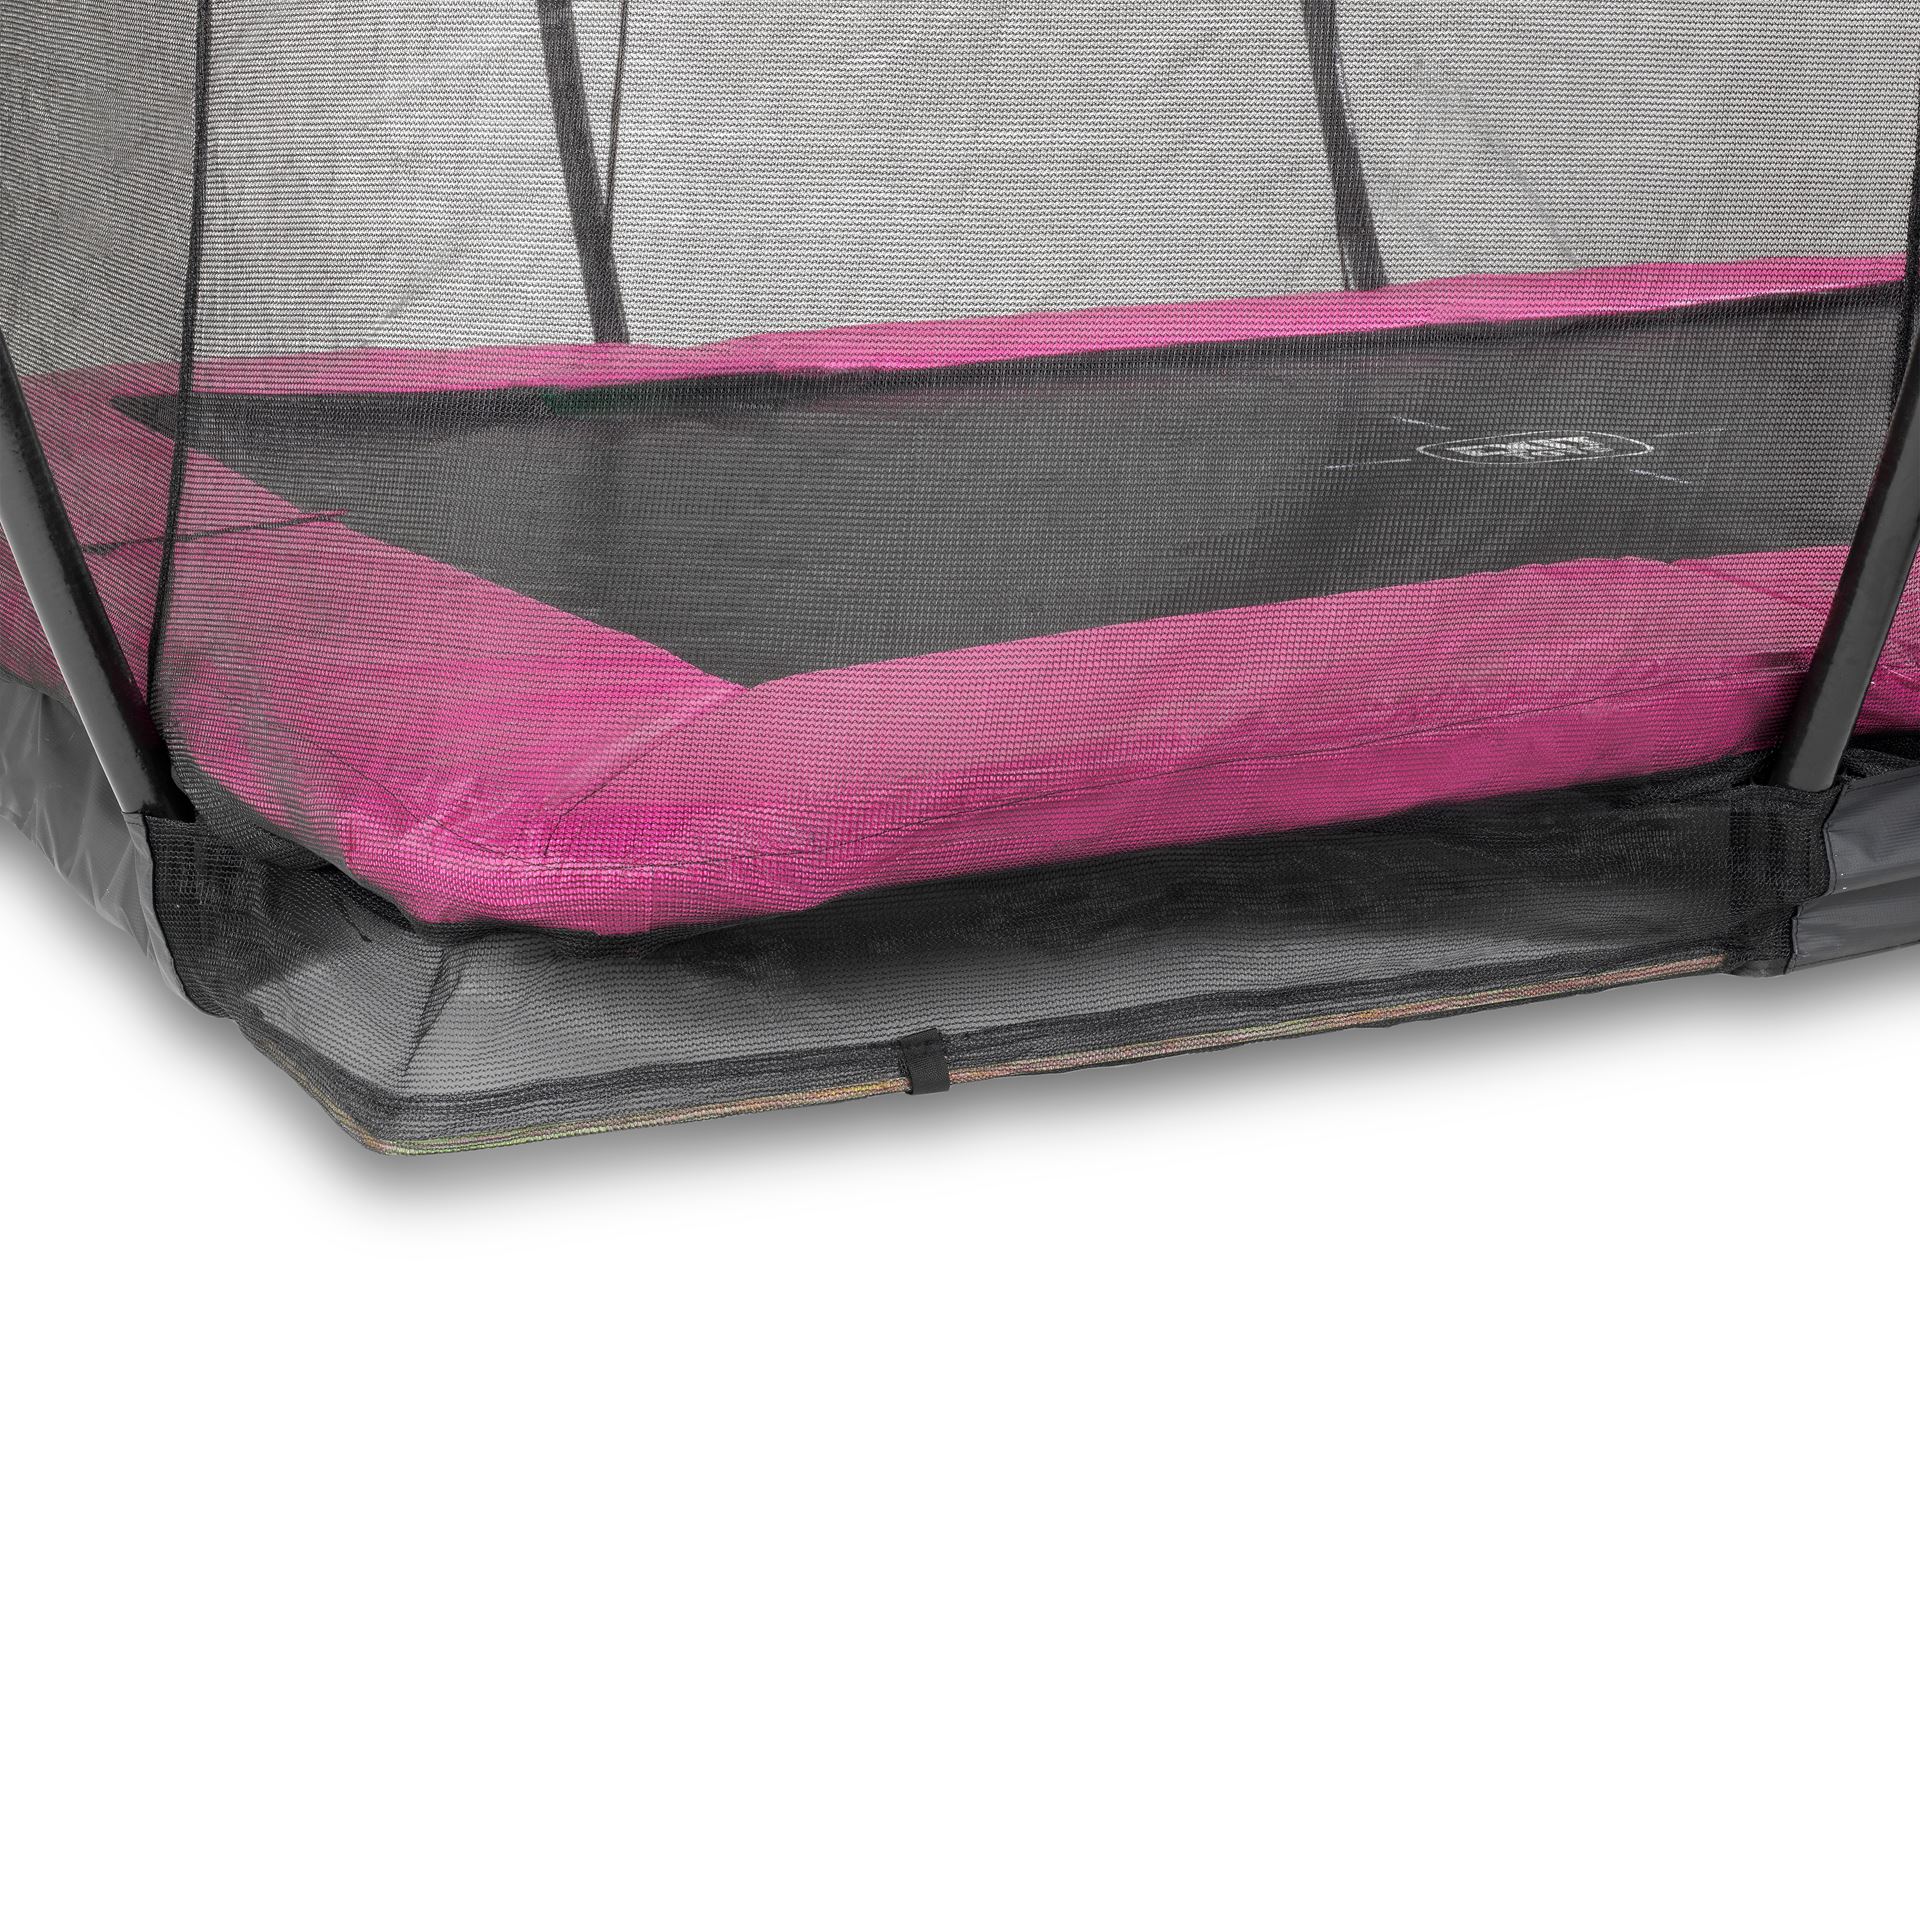 EXIT-Silhouette-inground-trampoline-214x305cm-met-veiligheidsnet-roze